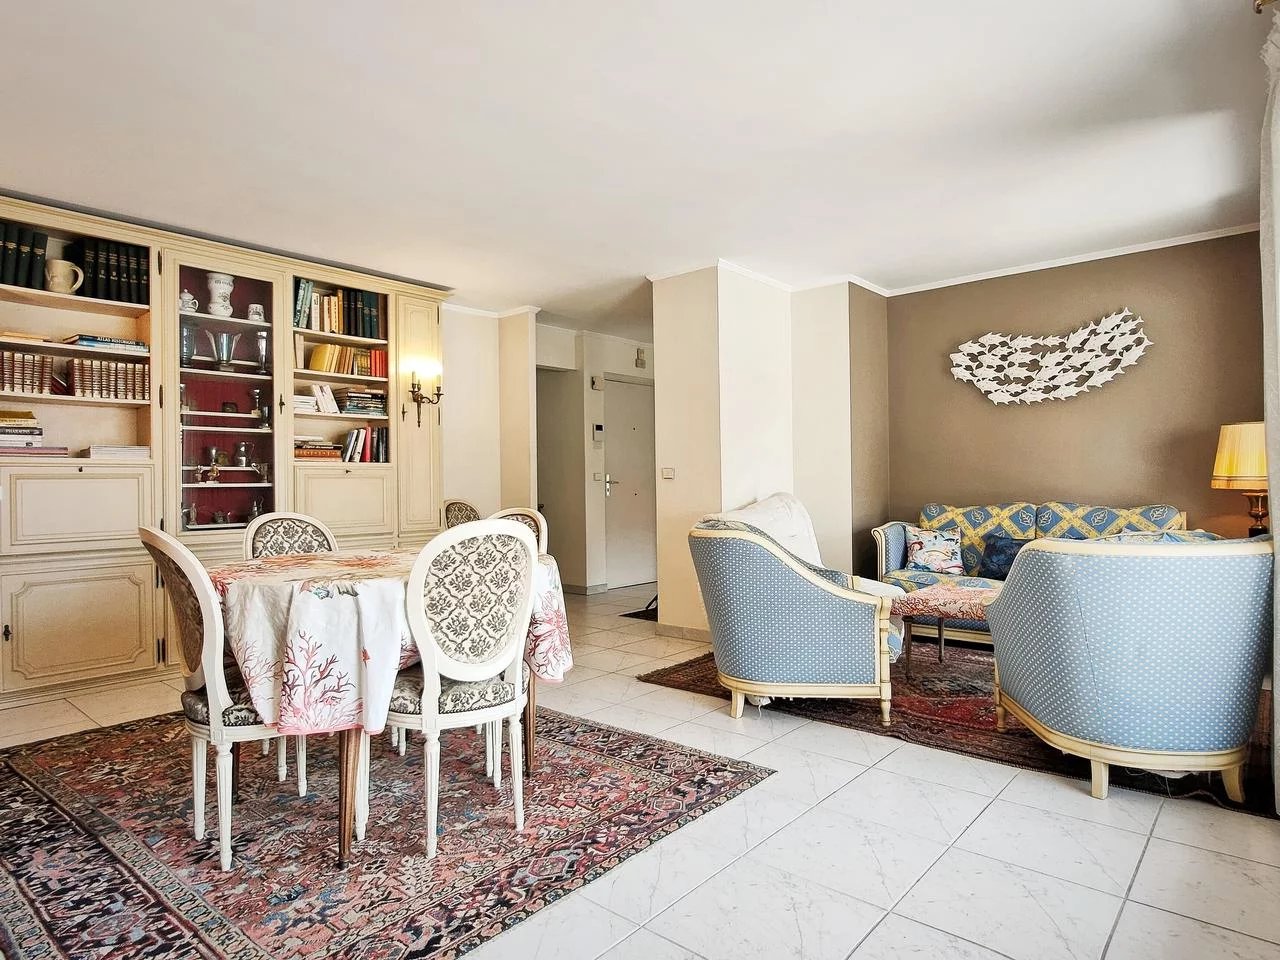 Appartement  3 Locali 84.45m2  In vendita   635 000 €